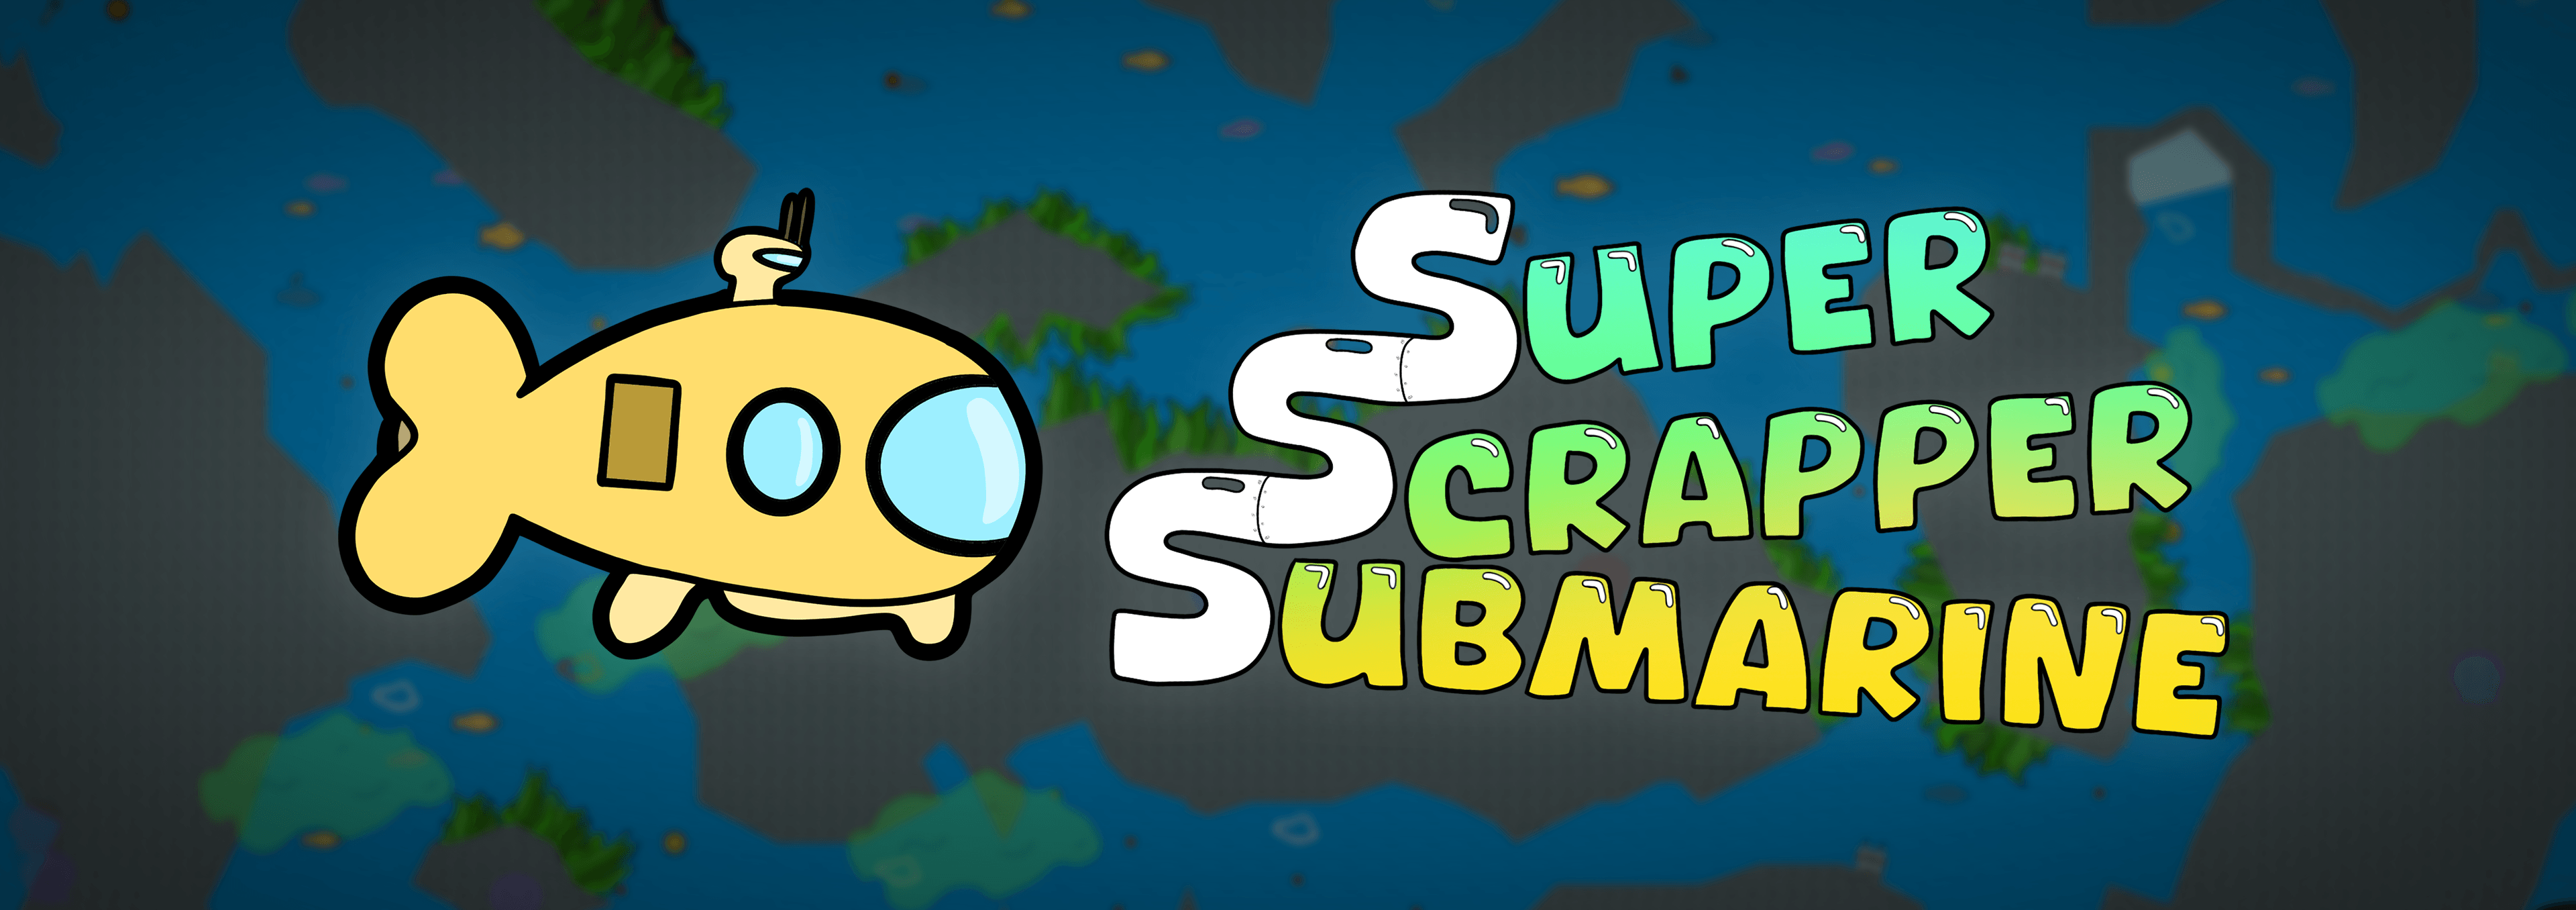 Super Scrapper Sumarine